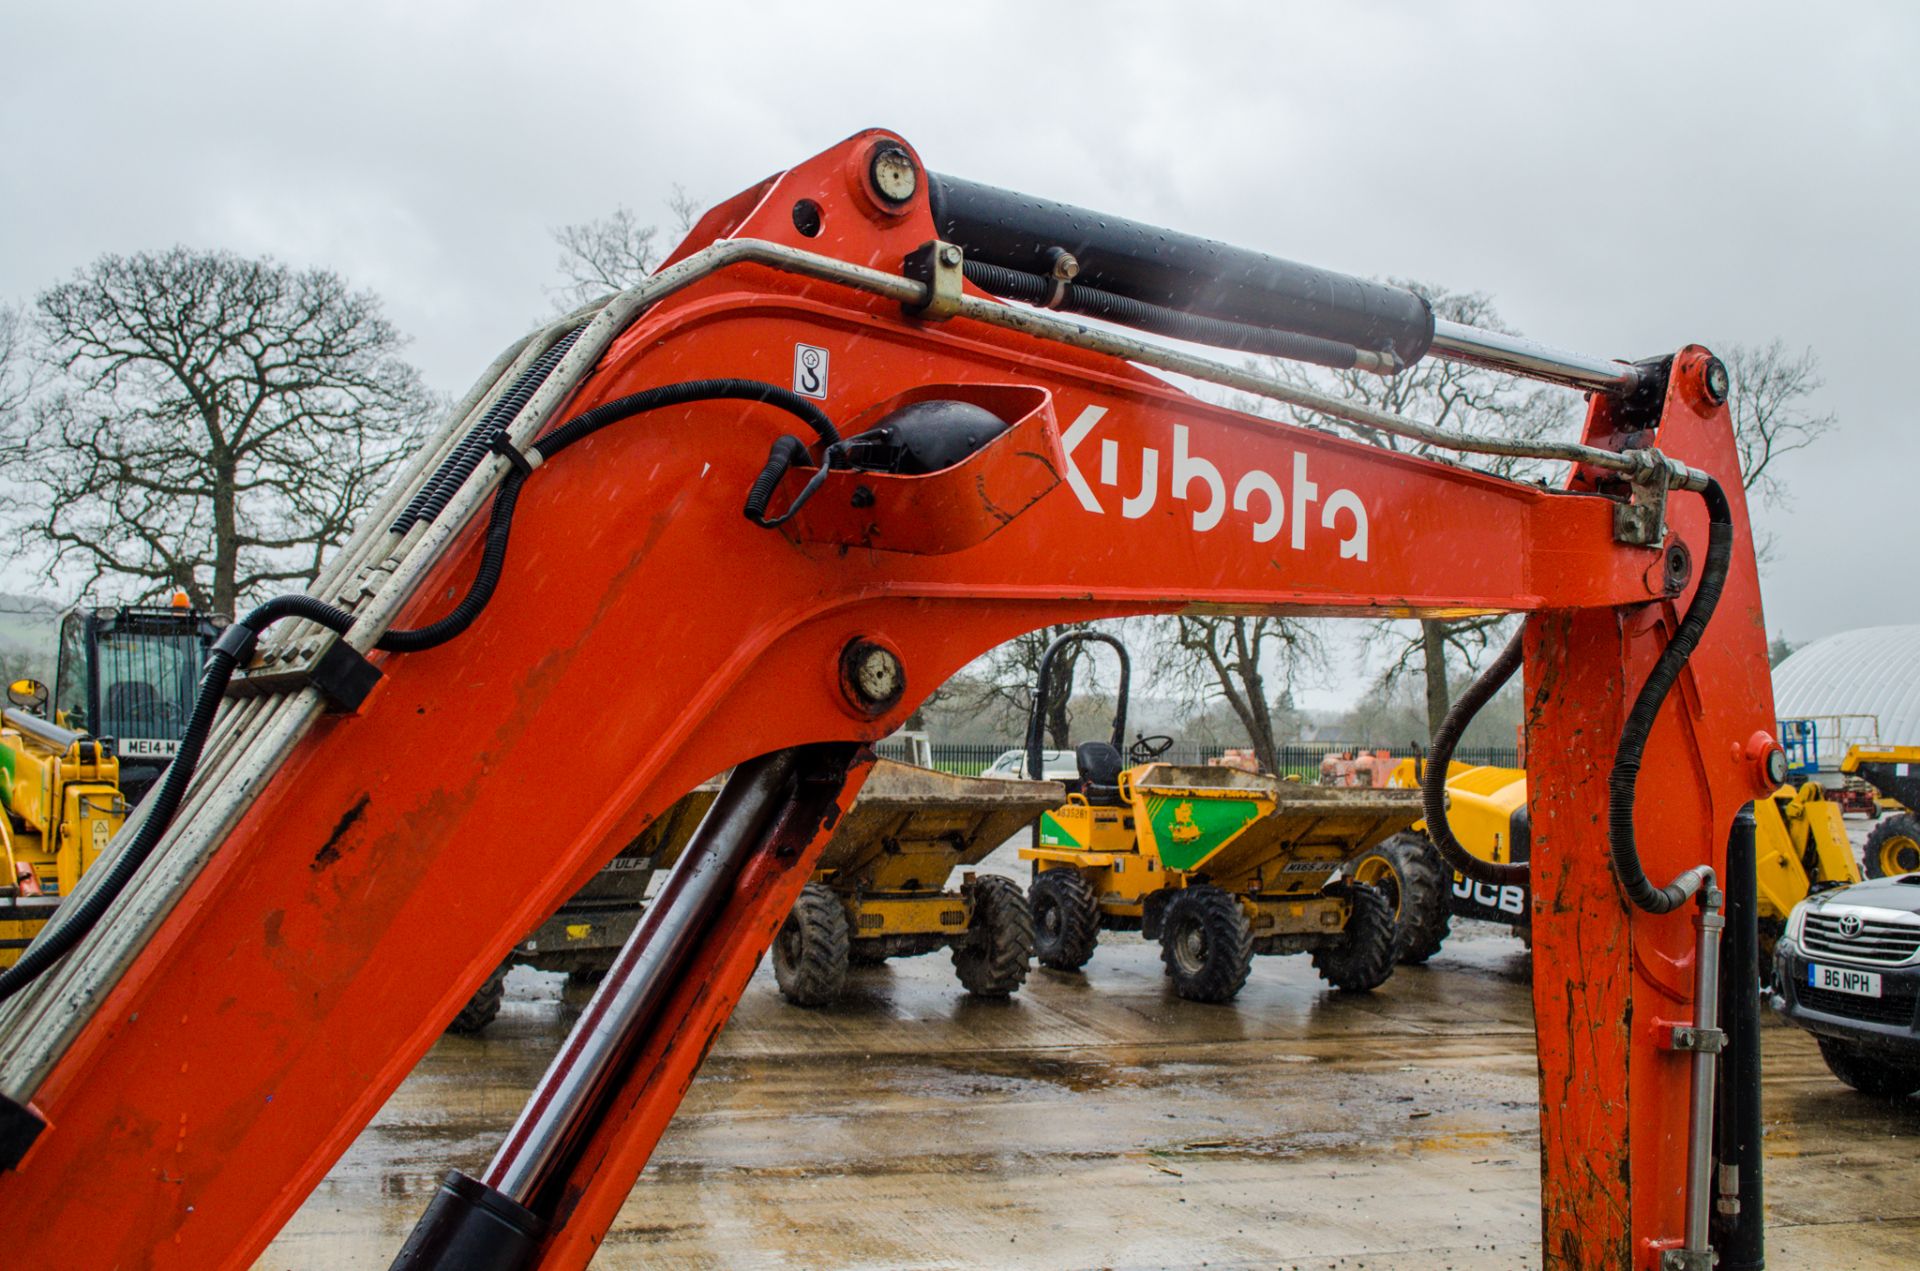 Kubota KX61-3 2.6 tonne rubber tracked mini excavator Year: 2015 S/N: 81541 Recorded Hours: 3107 - Image 11 of 22